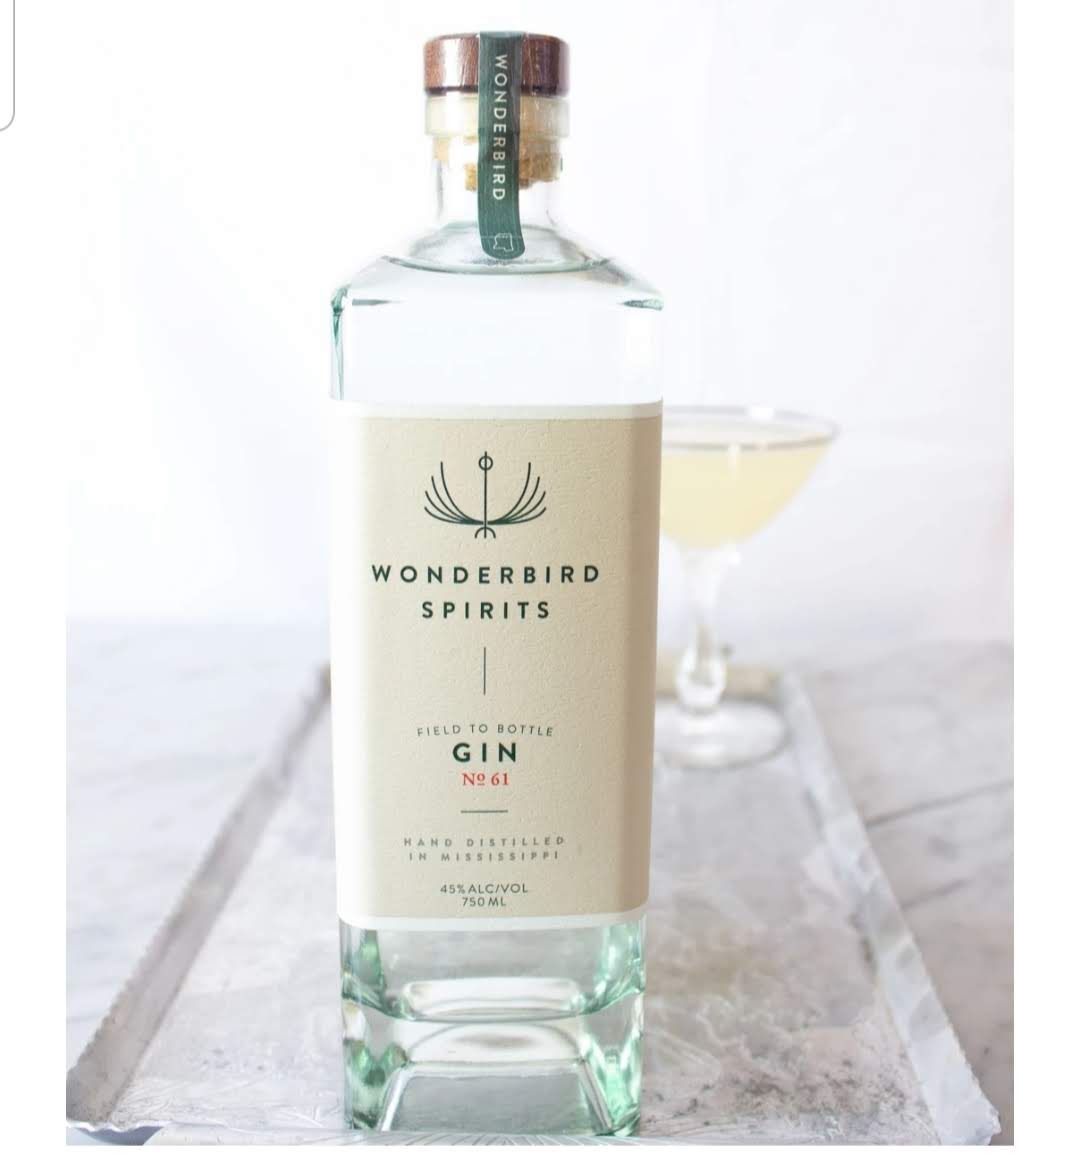 A bottle of wonderbird Spirits gin